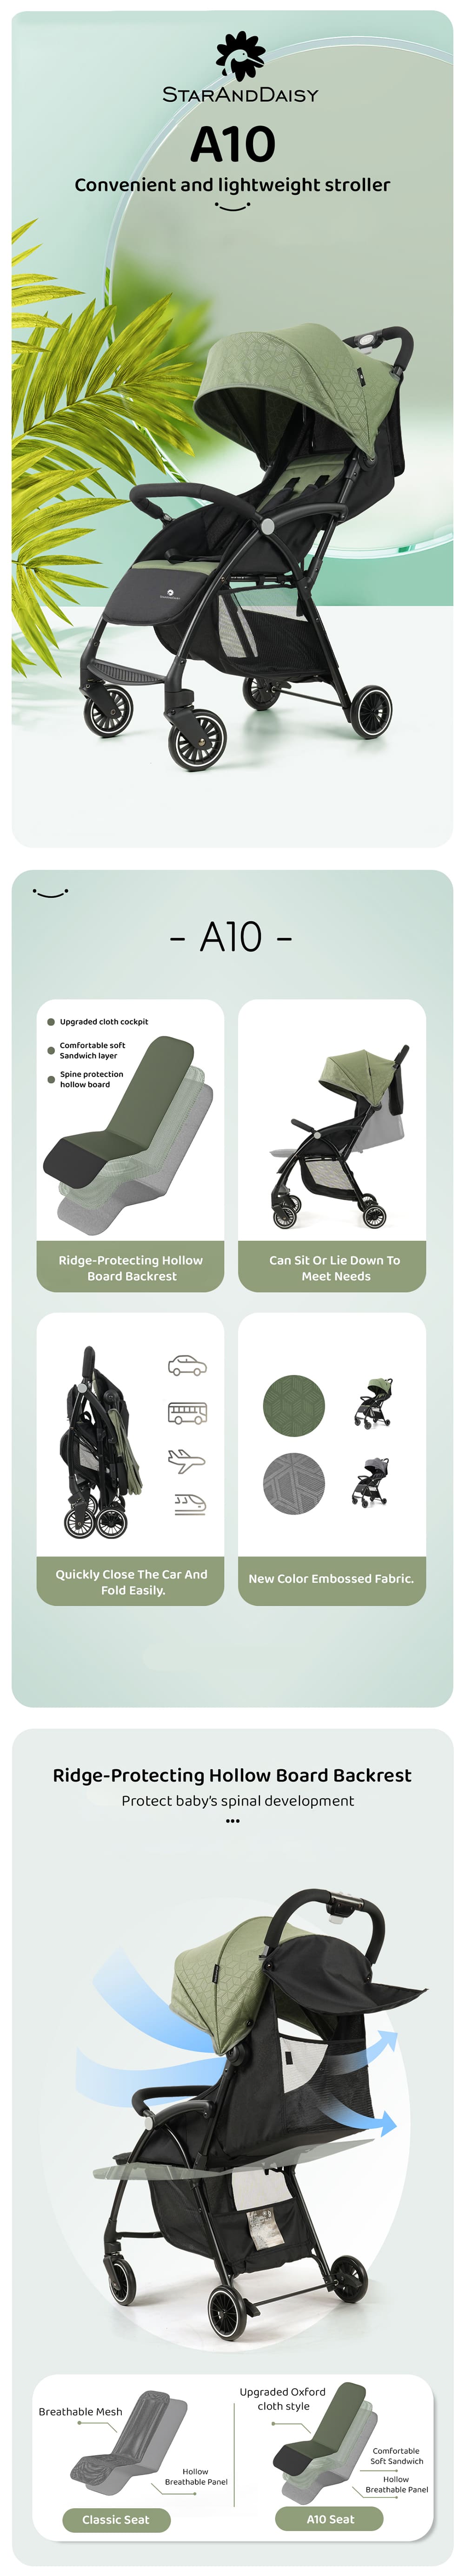 Best Lightweight Baby Stroller for Travel